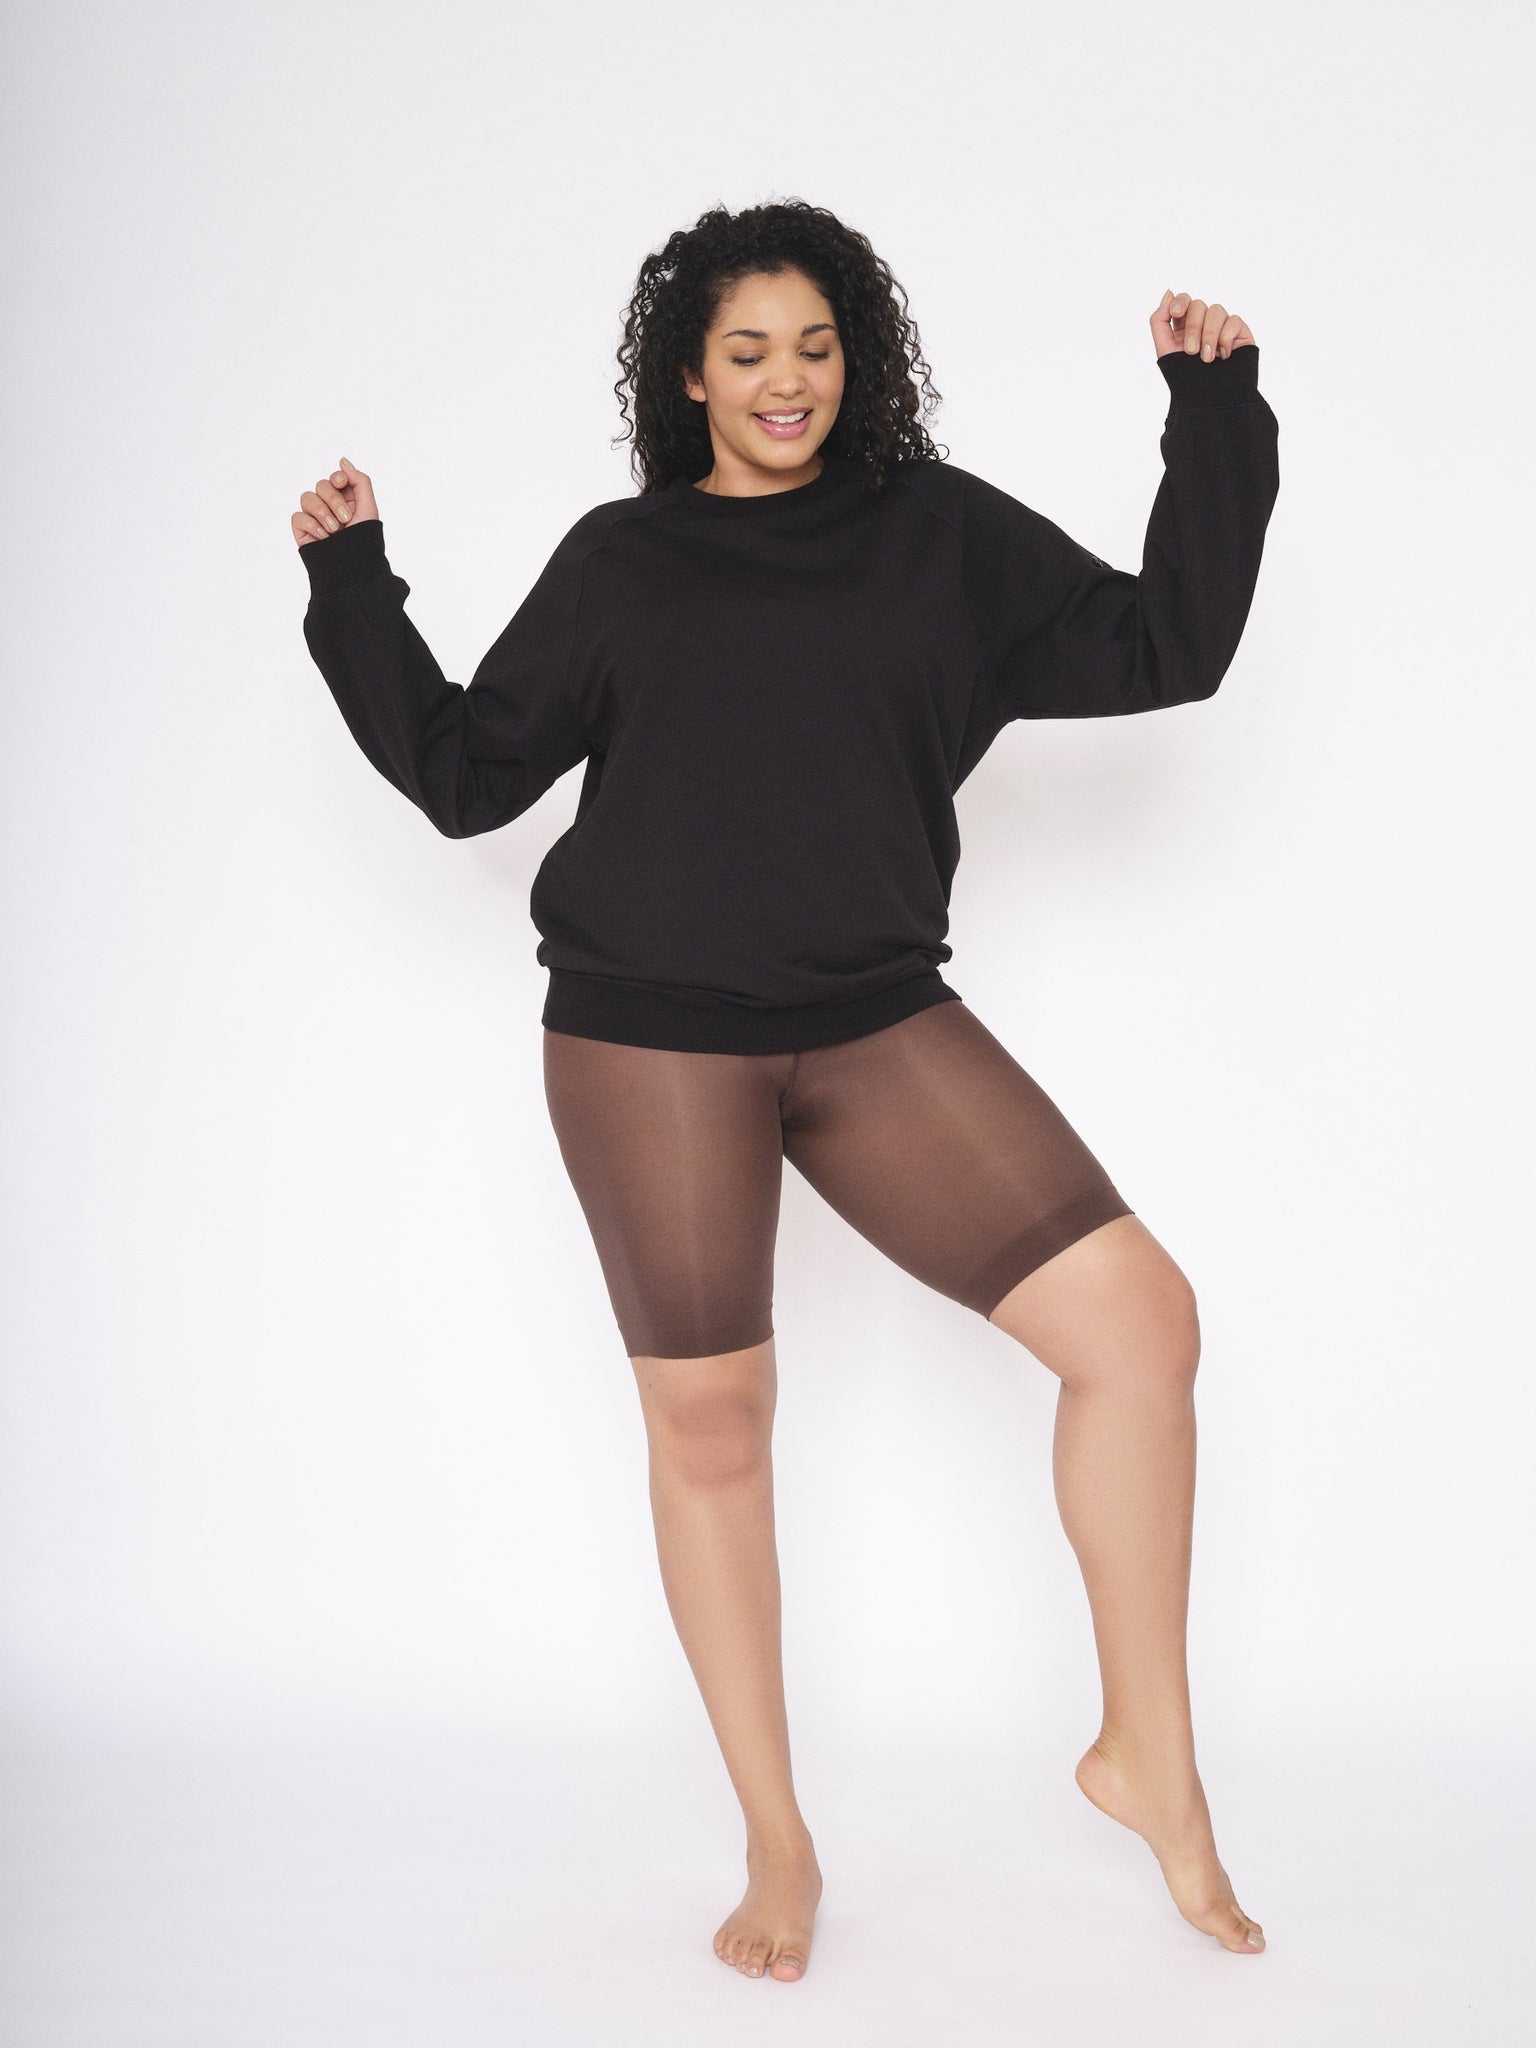 Anti-Chafing Shorts 80 Denier Decadent Brownie - Ms. Shape